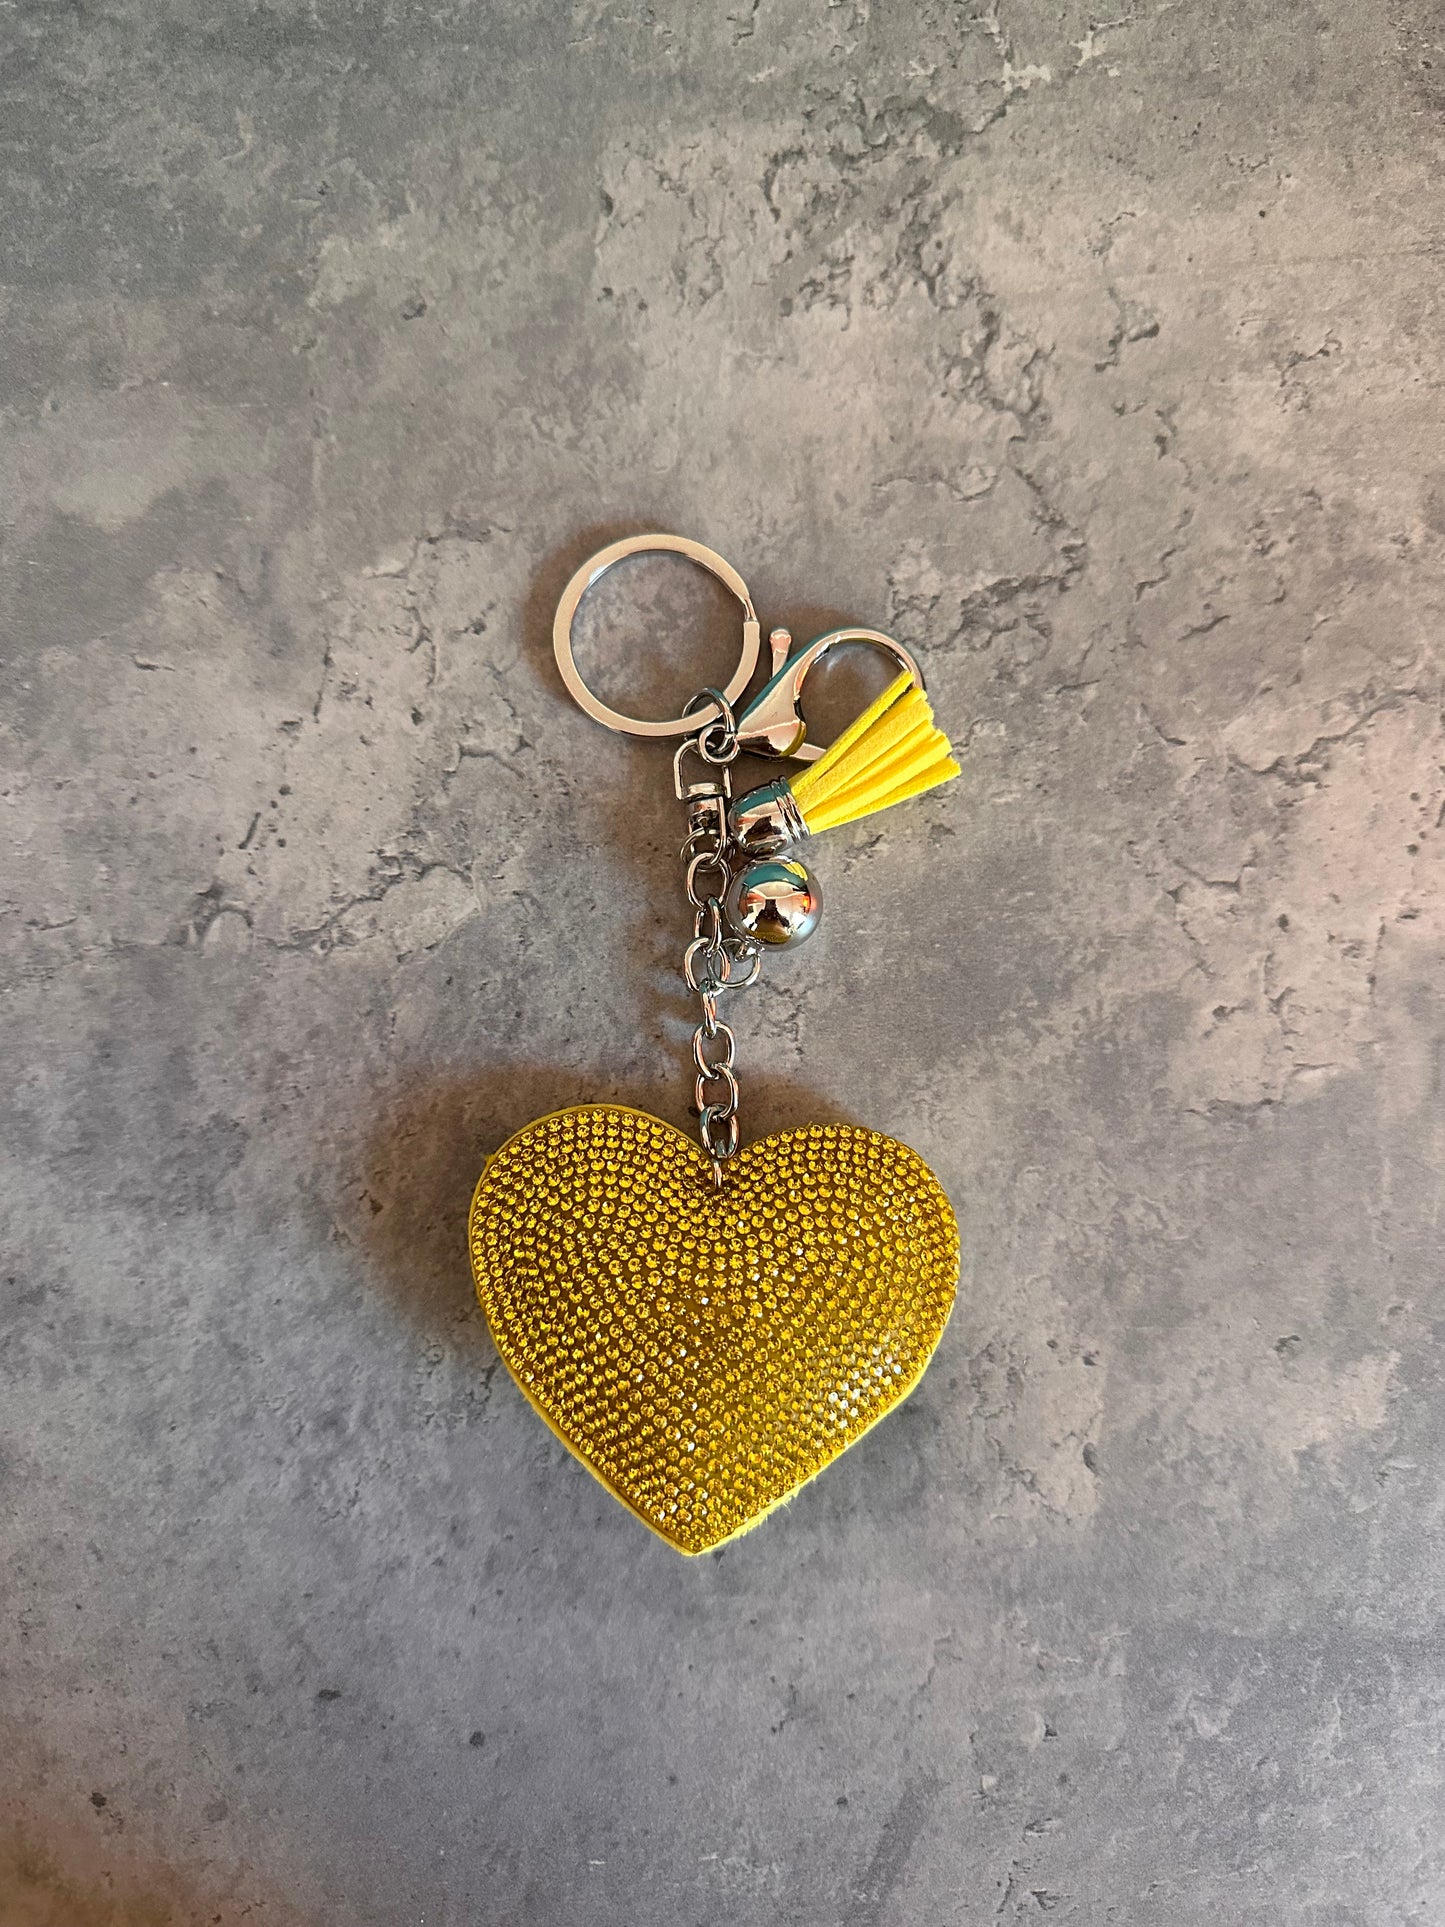 Bling Heart keychain